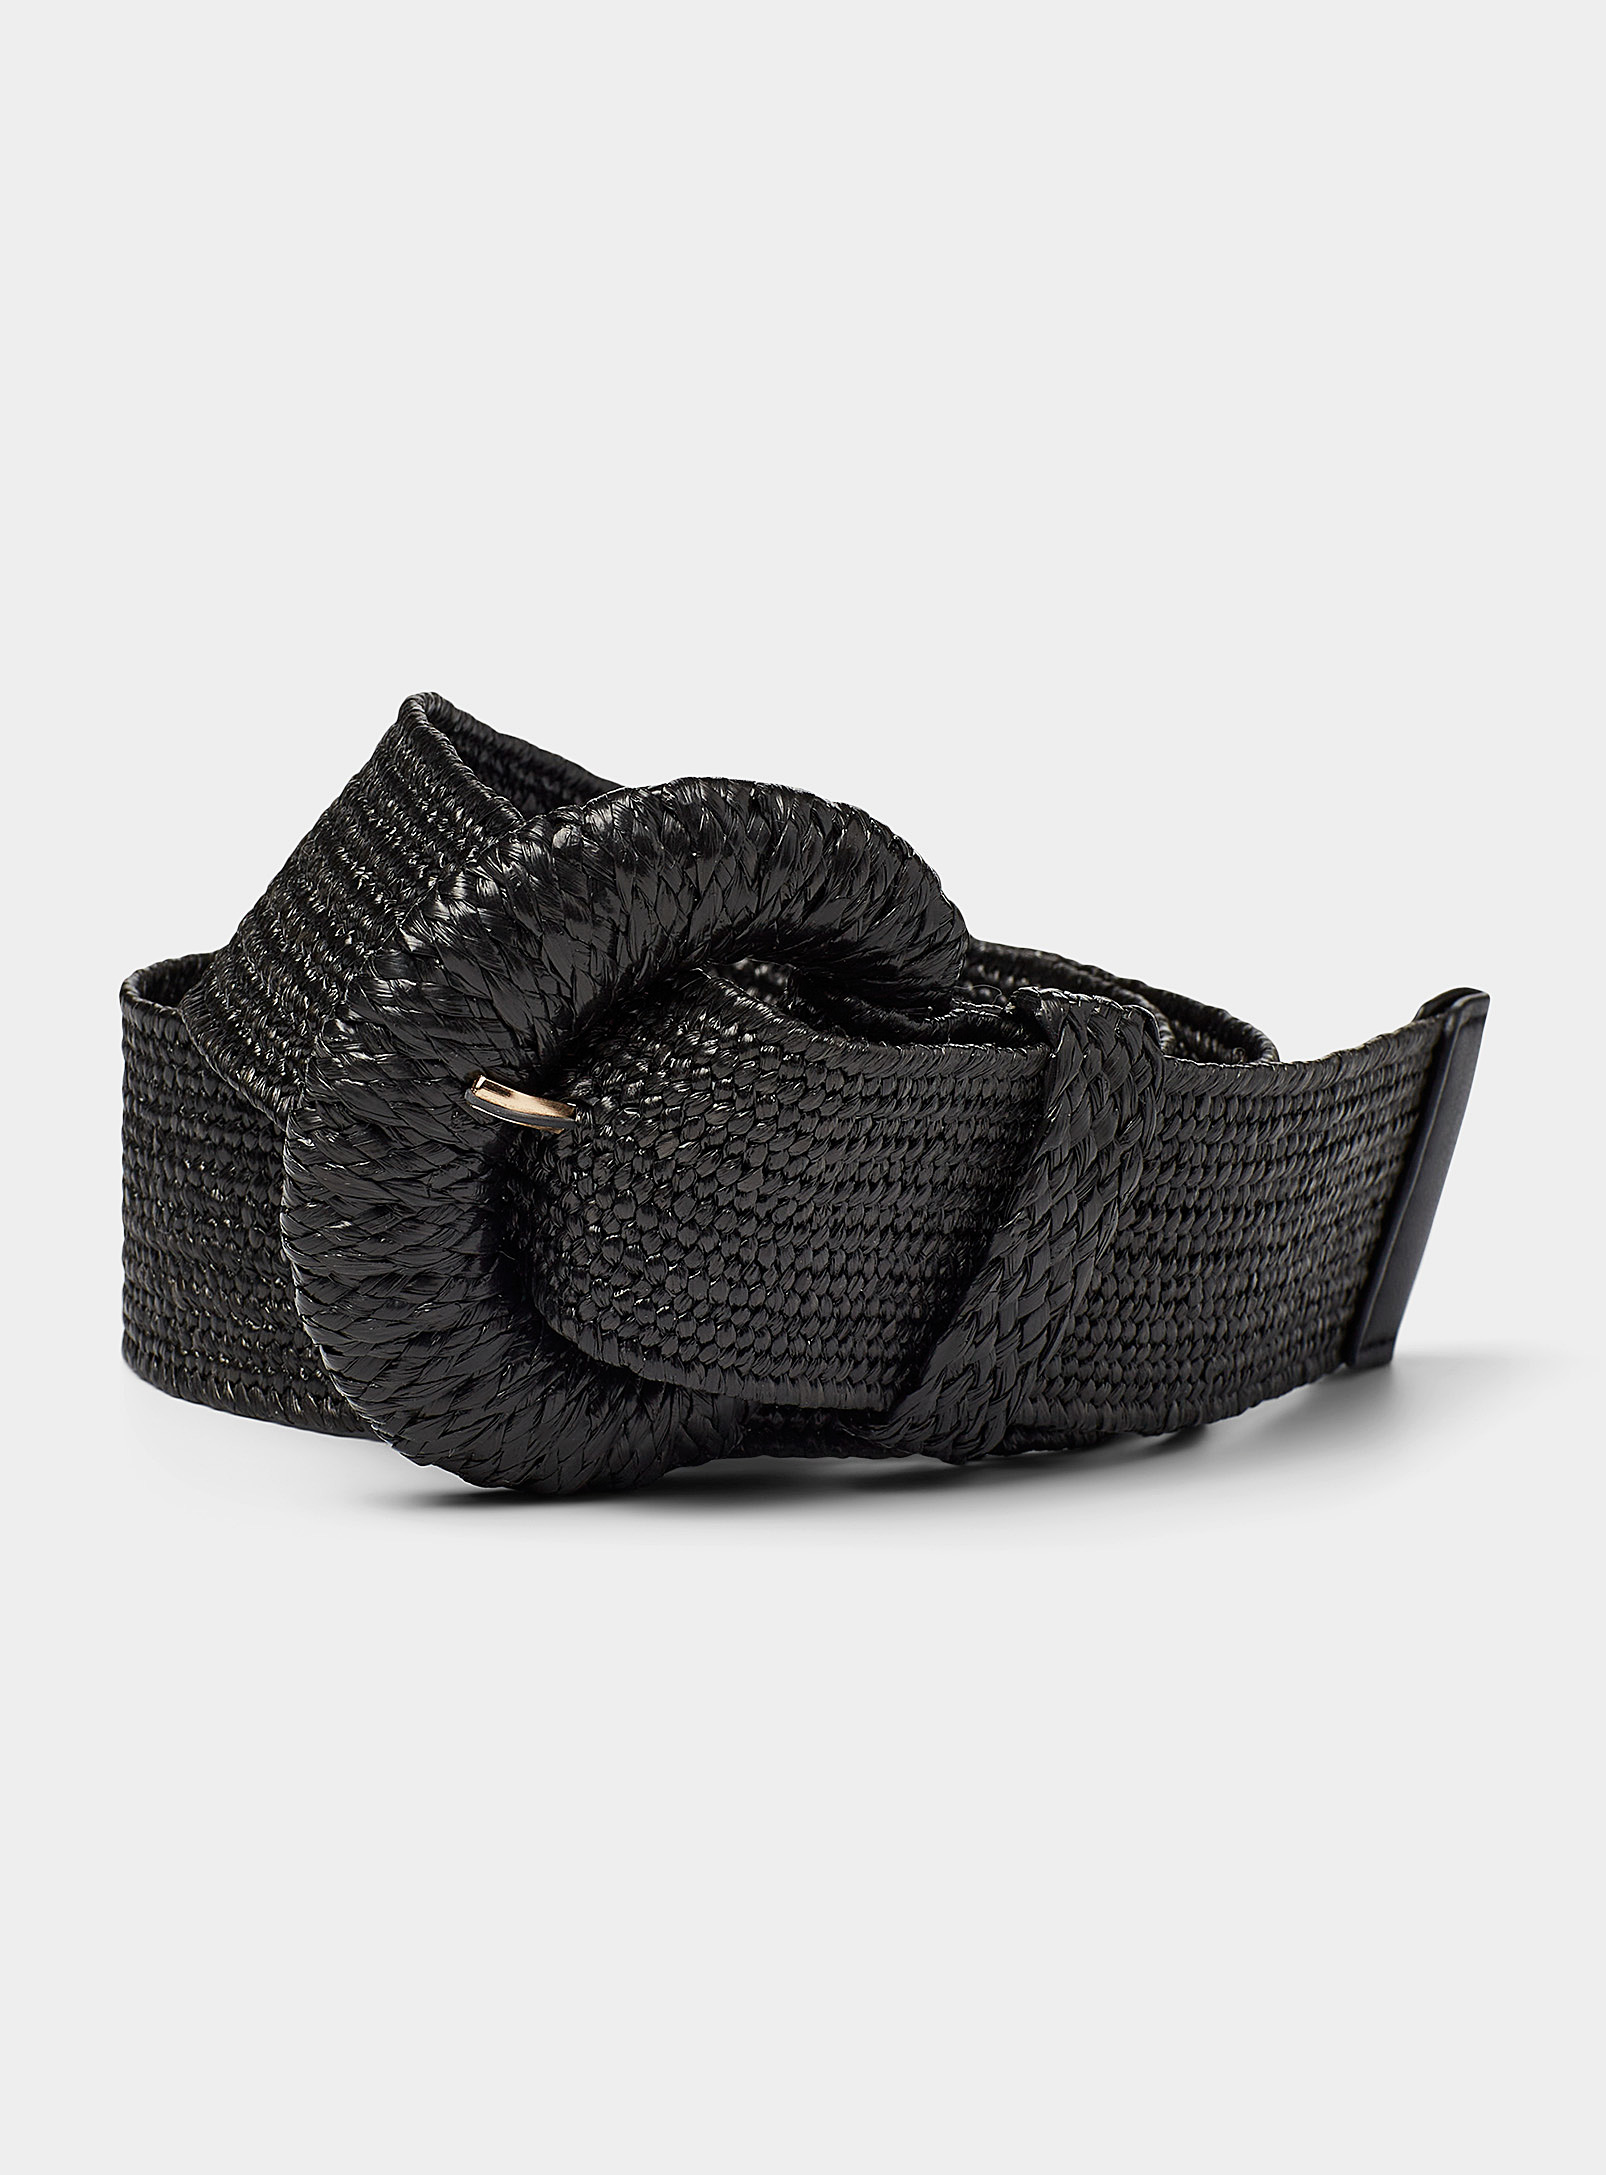 Simons - Women's Wide braided straw-like belt